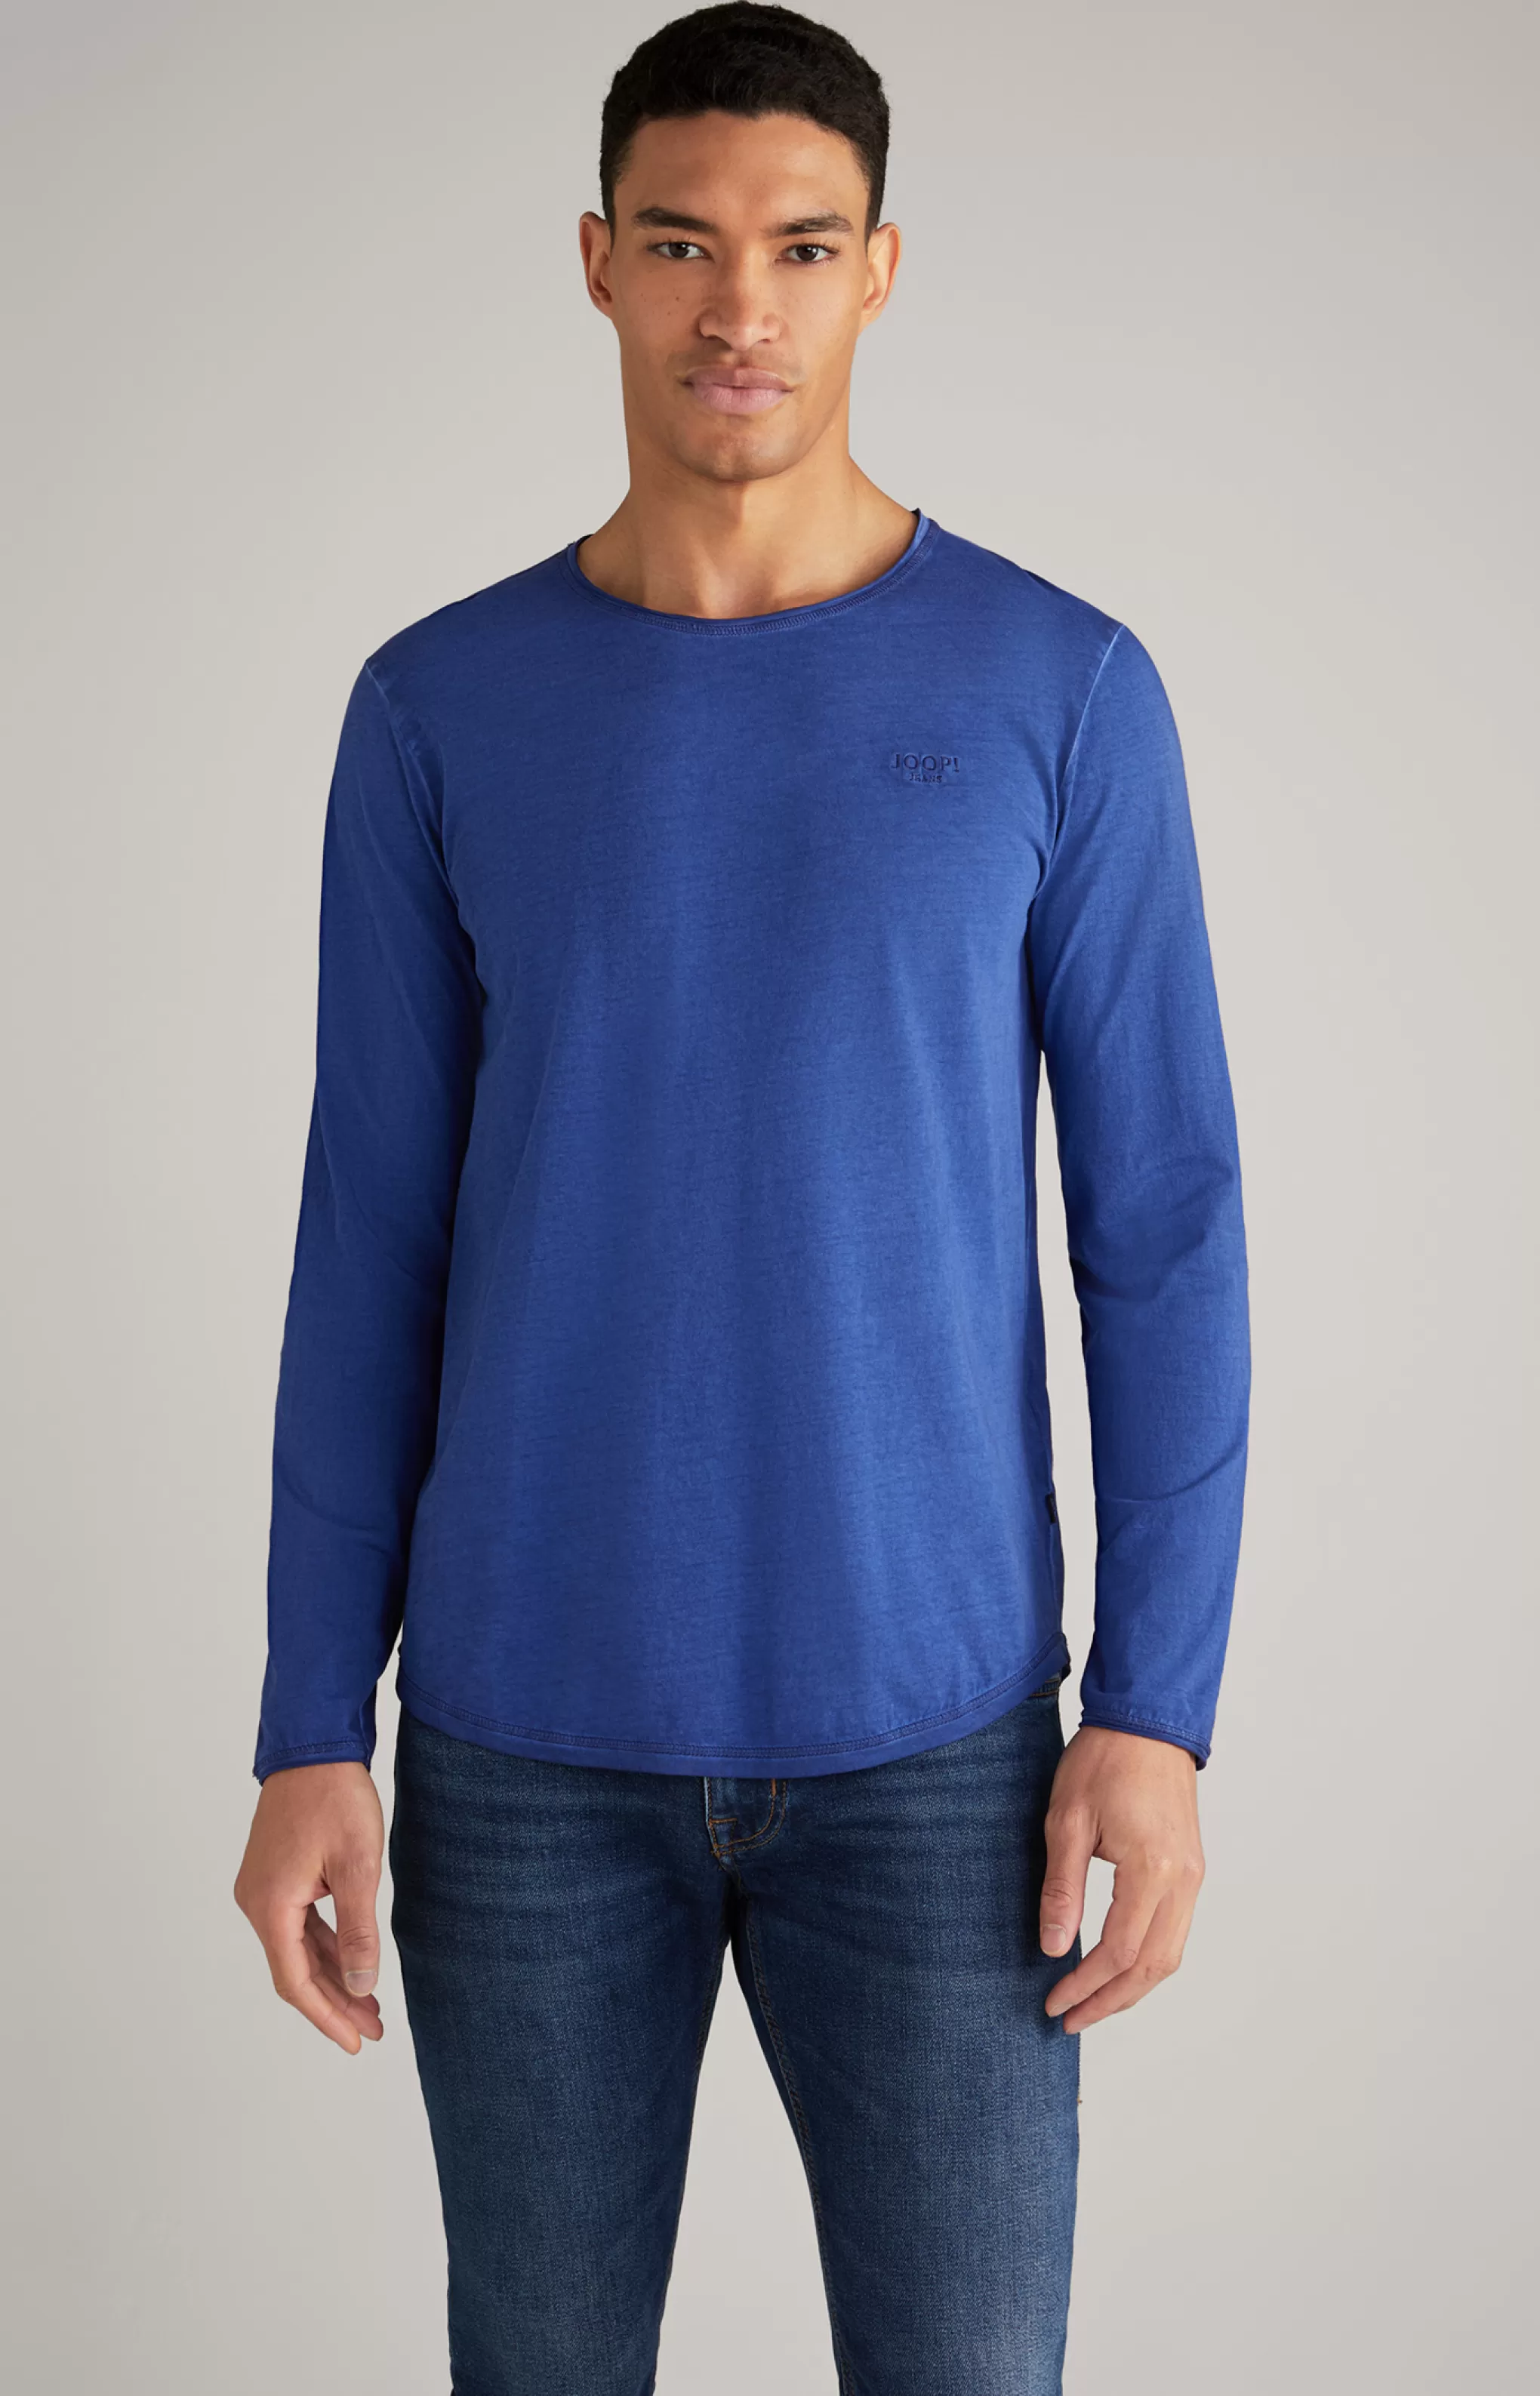 Sweatshirts | T-shirts | Clothing*JOOP Sweatshirts | T-shirts | Clothing Carlos Long Sleeved Top in Royal Blue Melange